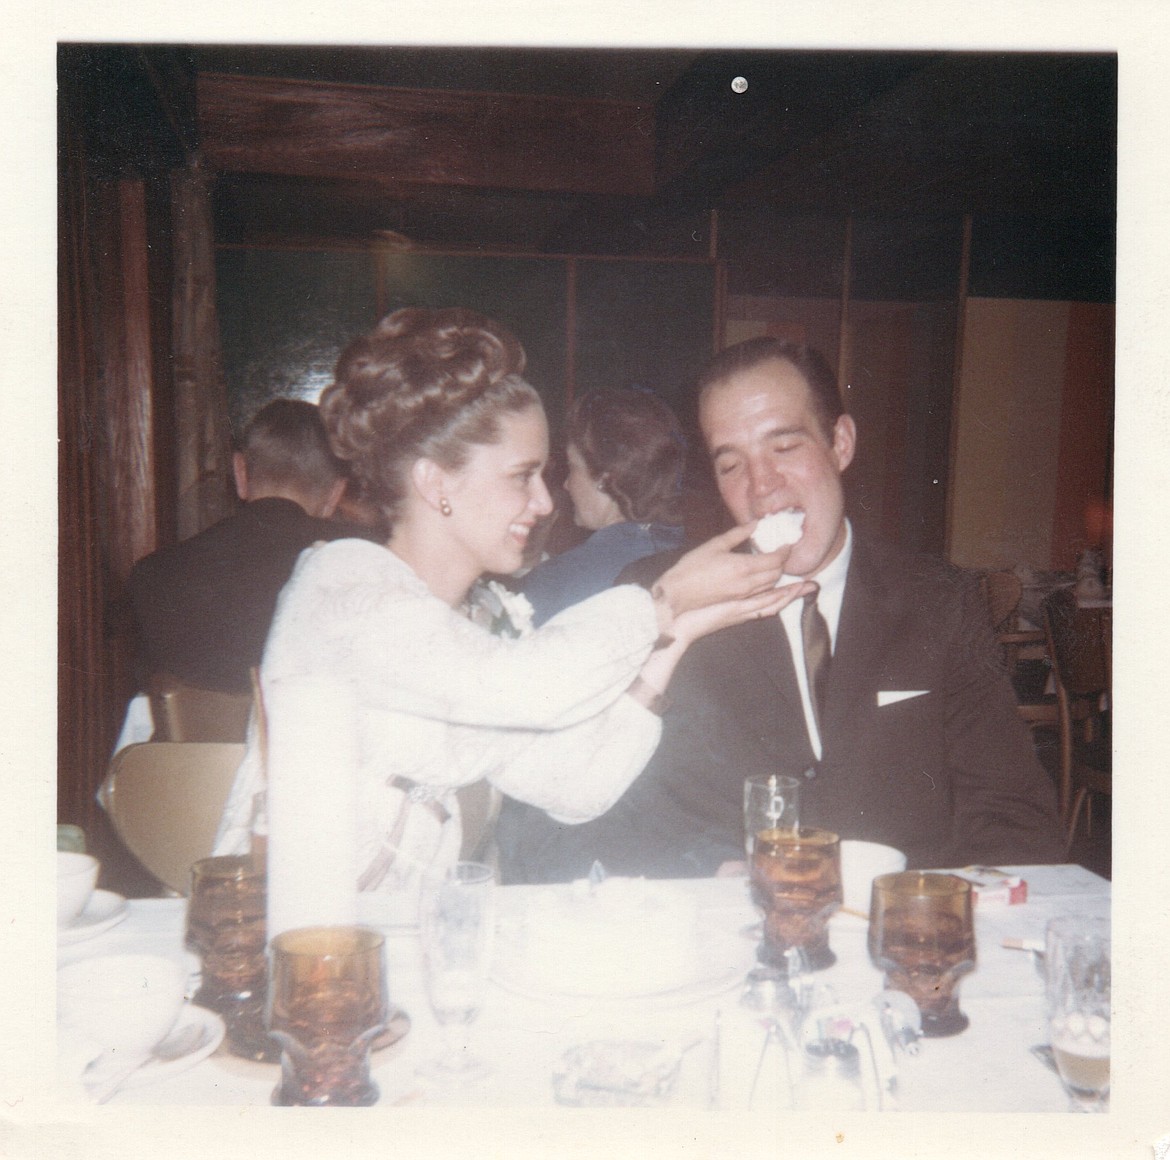 Newlyweds Chuck and Linda Smith, enjoying their wedding cake at Cedars Floating Restaurant on Nov. 7, 1964.